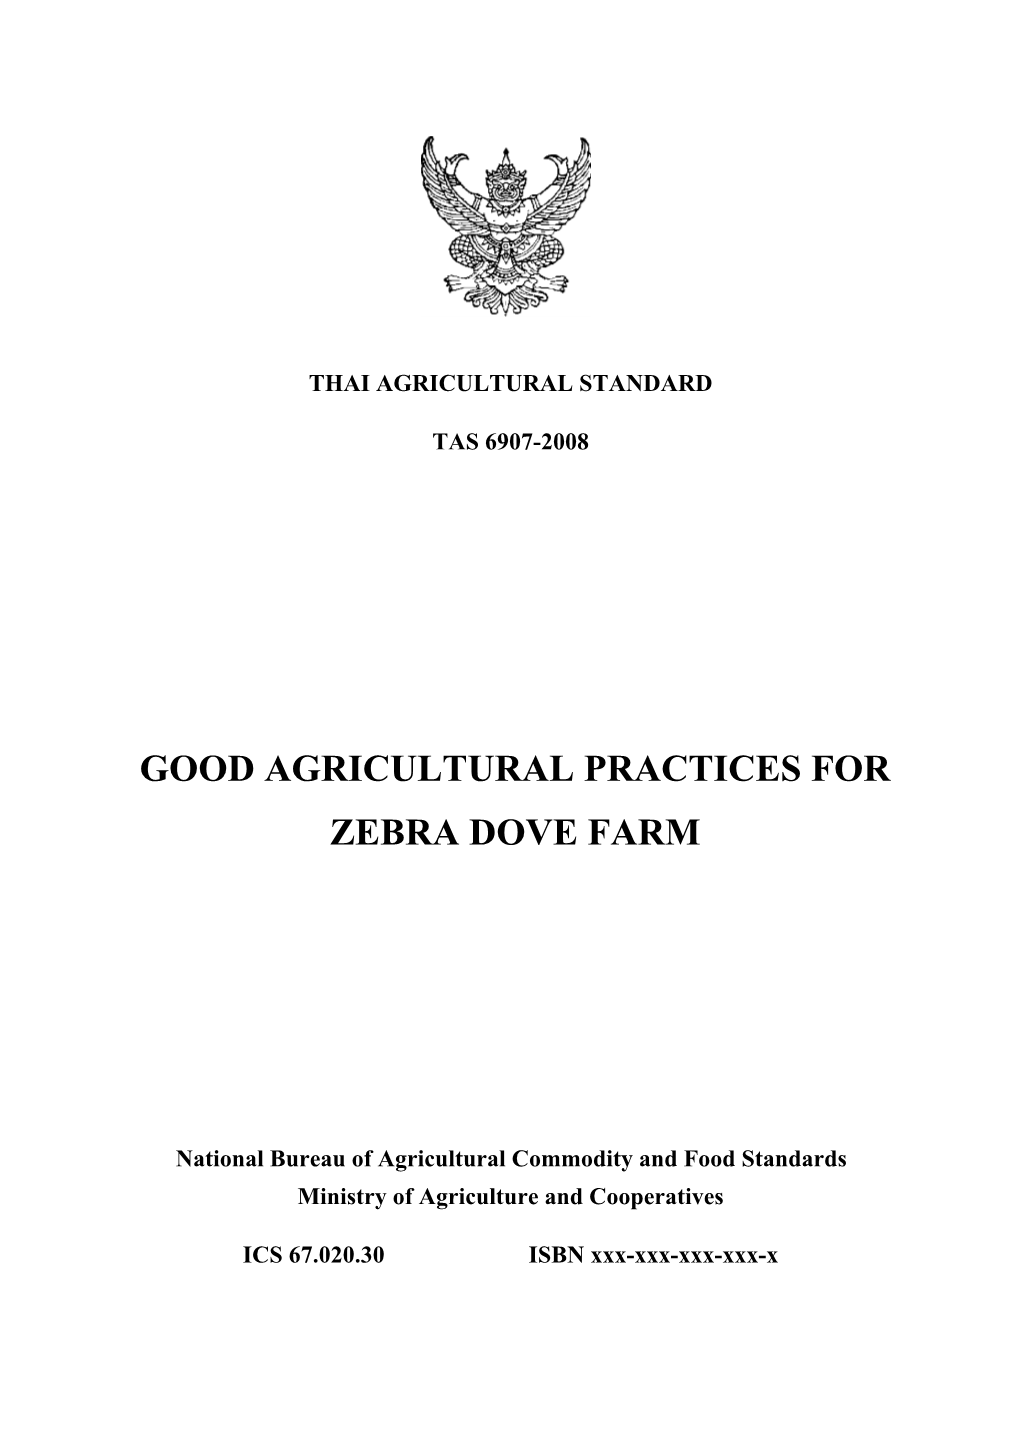 Good Agricultural Practices for Zebra Dove Farm